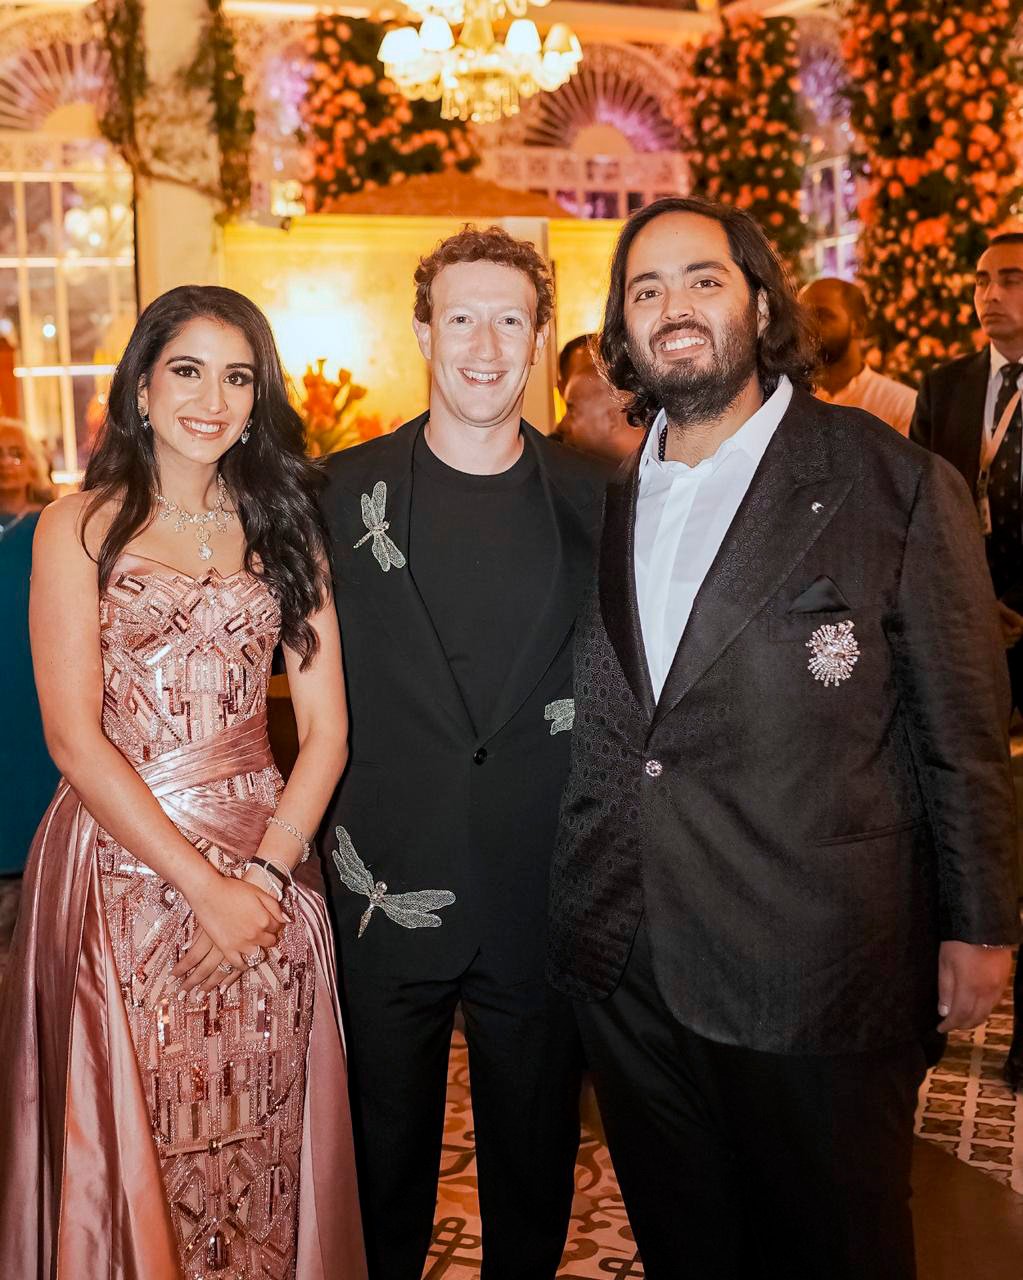 Mark Zuckerberg, centre, poses for a photograph with billionaire industrialist Mukesh Ambani’s son Anant Ambani, right, and Radhika Merchant at their pre-wedding bash in Jamnagar, India on Saturday. Photo: Reliance group via AP